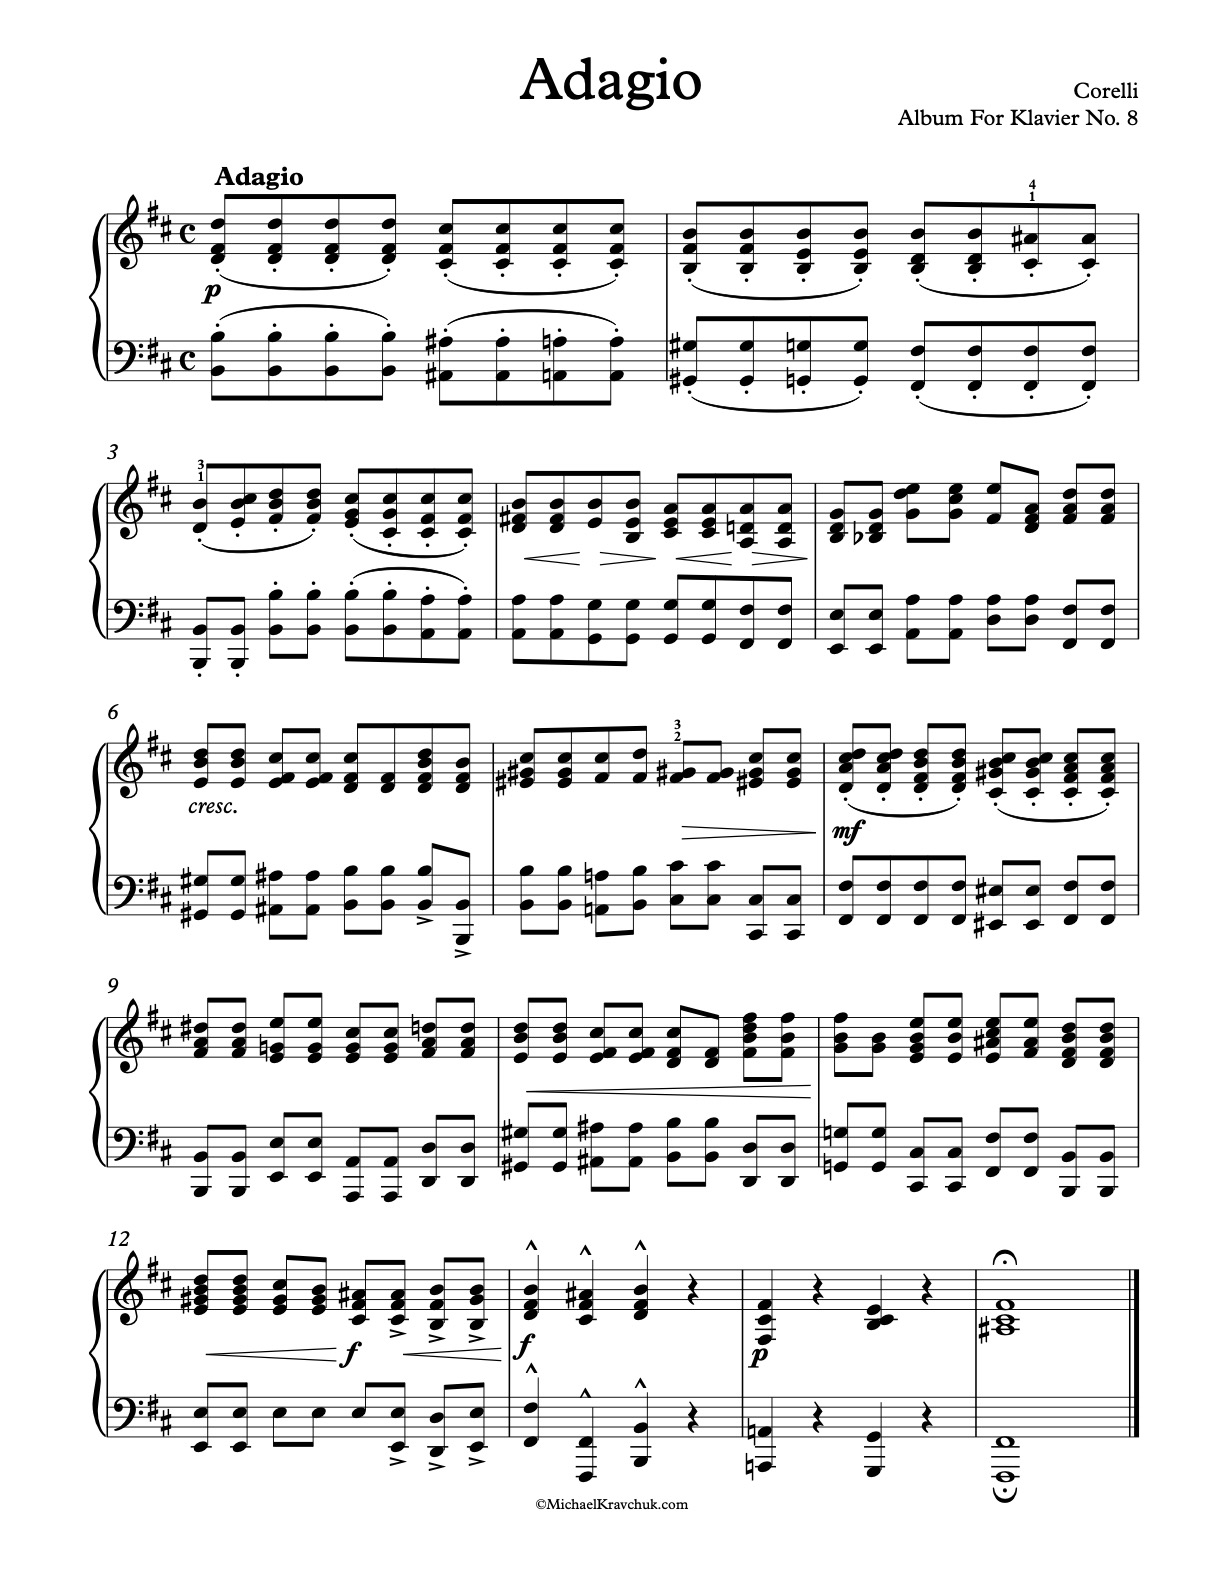 Album For Klavier – No. 8 Piano Sheet Music